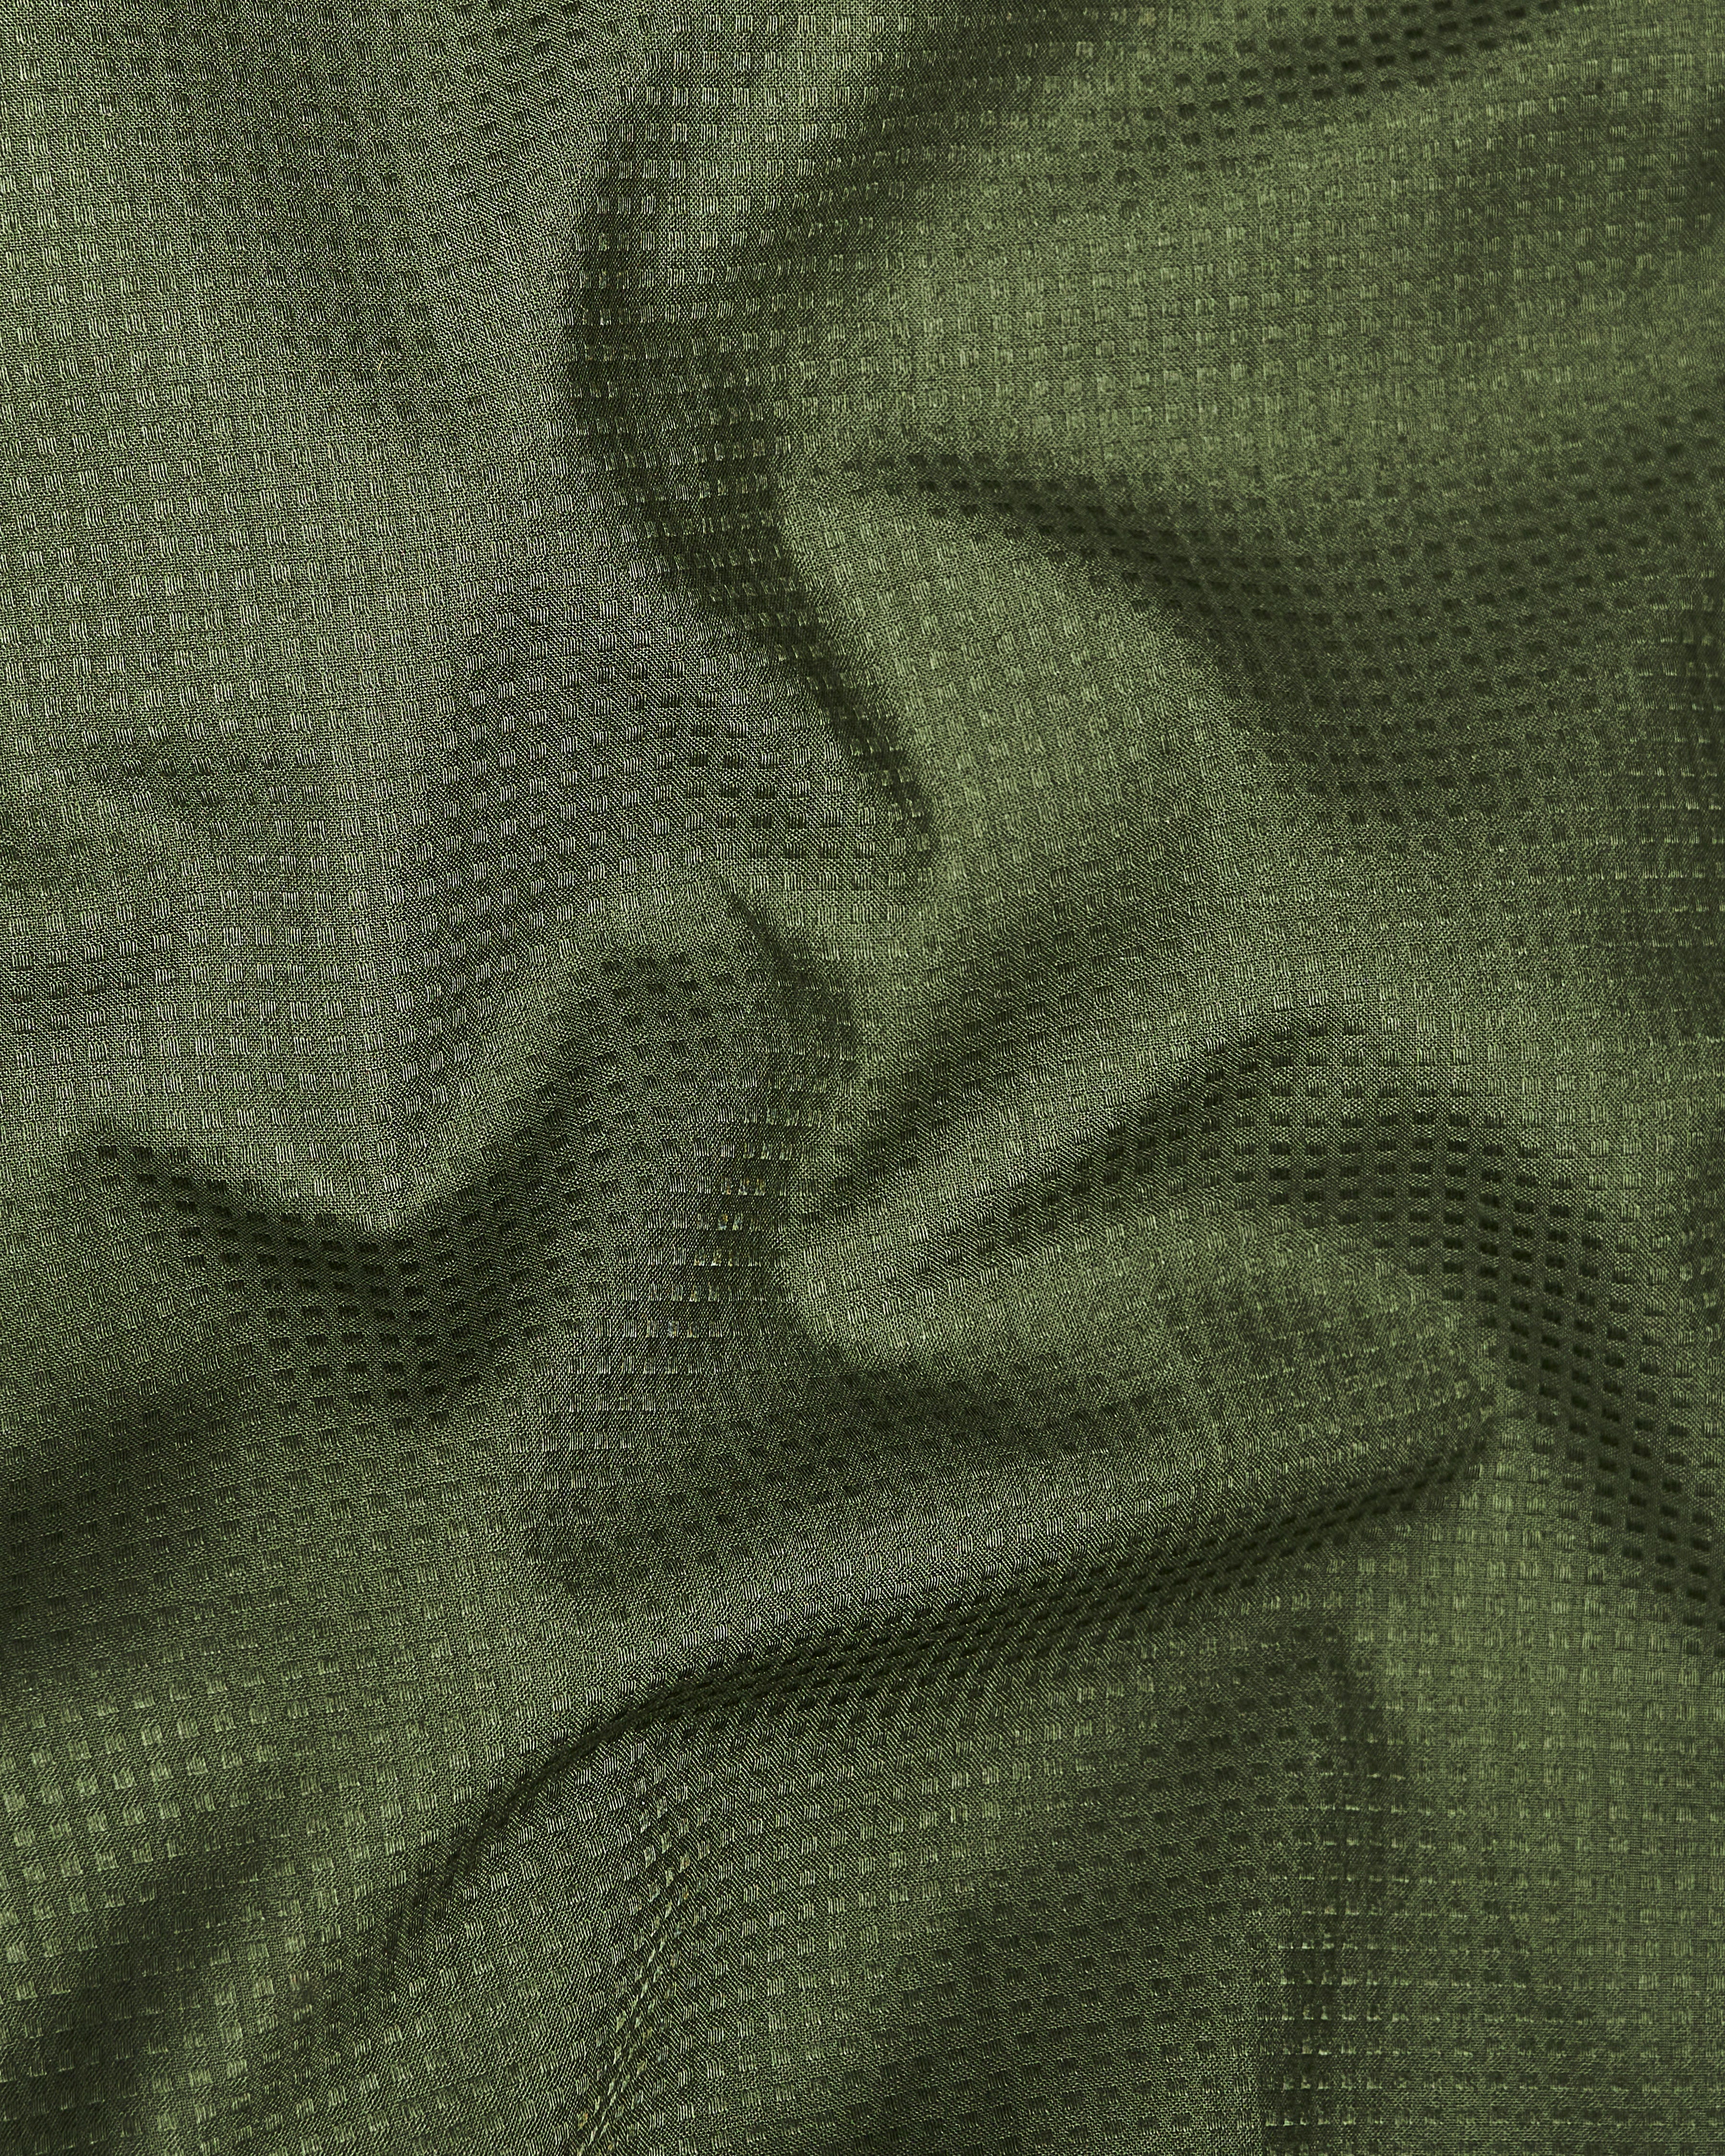 Verdigris Green Dobby Textured Premium Giza Cotton Shirt 9062-BD-38, 9062-BD-H-38, 9062-BD-39, 9062-BD-H-39, 9062-BD-40, 9062-BD-H-40, 9062-BD-42, 9062-BD-H-42, 9062-BD-44, 9062-BD-H-44, 9062-BD-46, 9062-BD-H-46, 9062-BD-48, 9062-BD-H-48, 9062-BD-50, 9062-BD-H-50, 9062-BD-52, 9062-BD-H-52